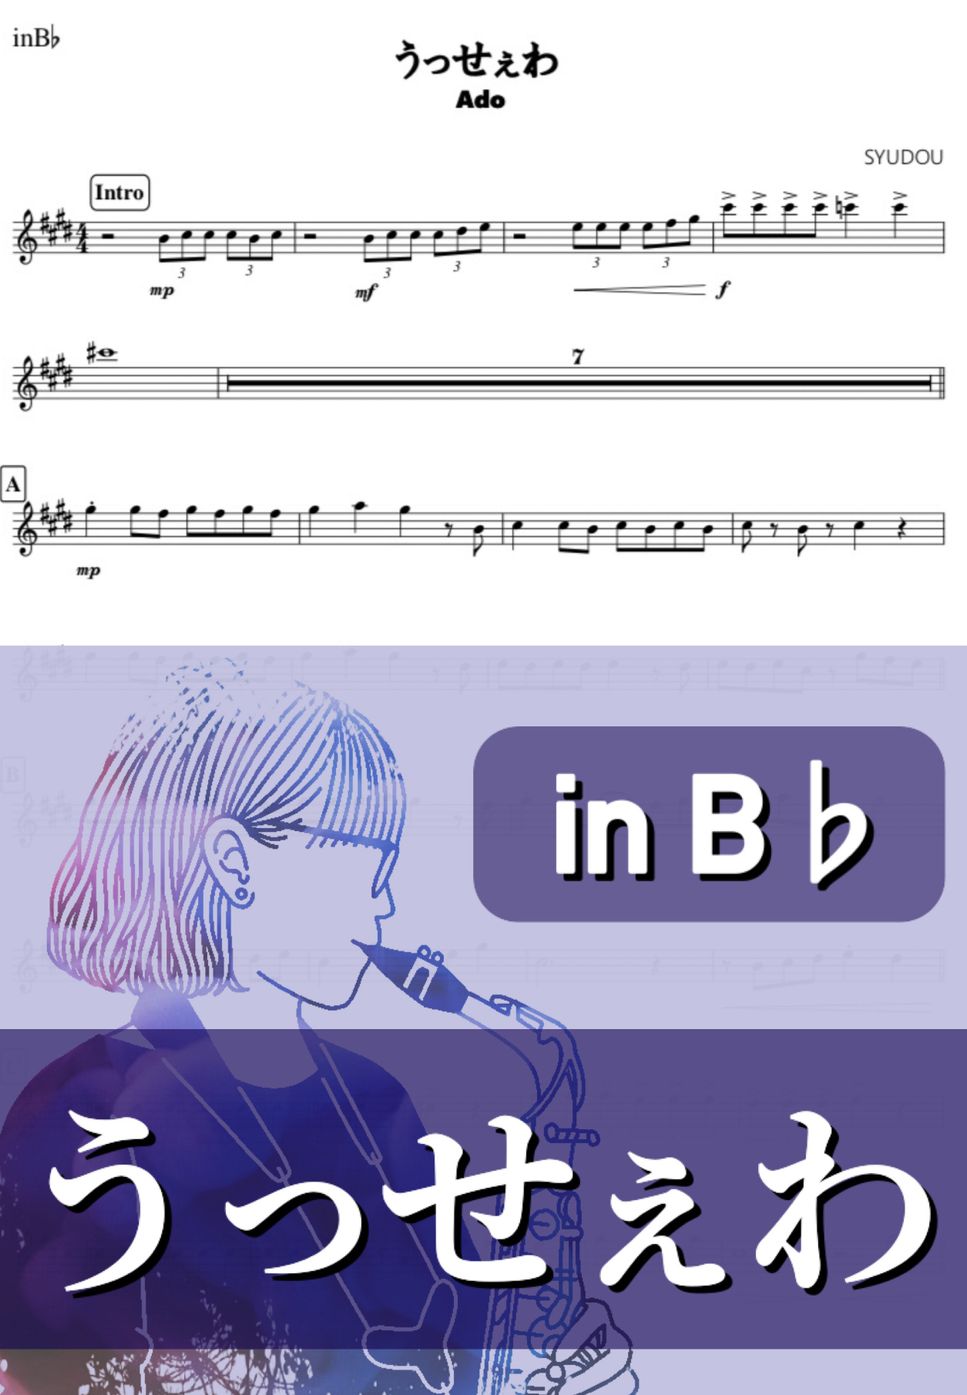 Ado - うっせぇわ (B♭) by kanamusic